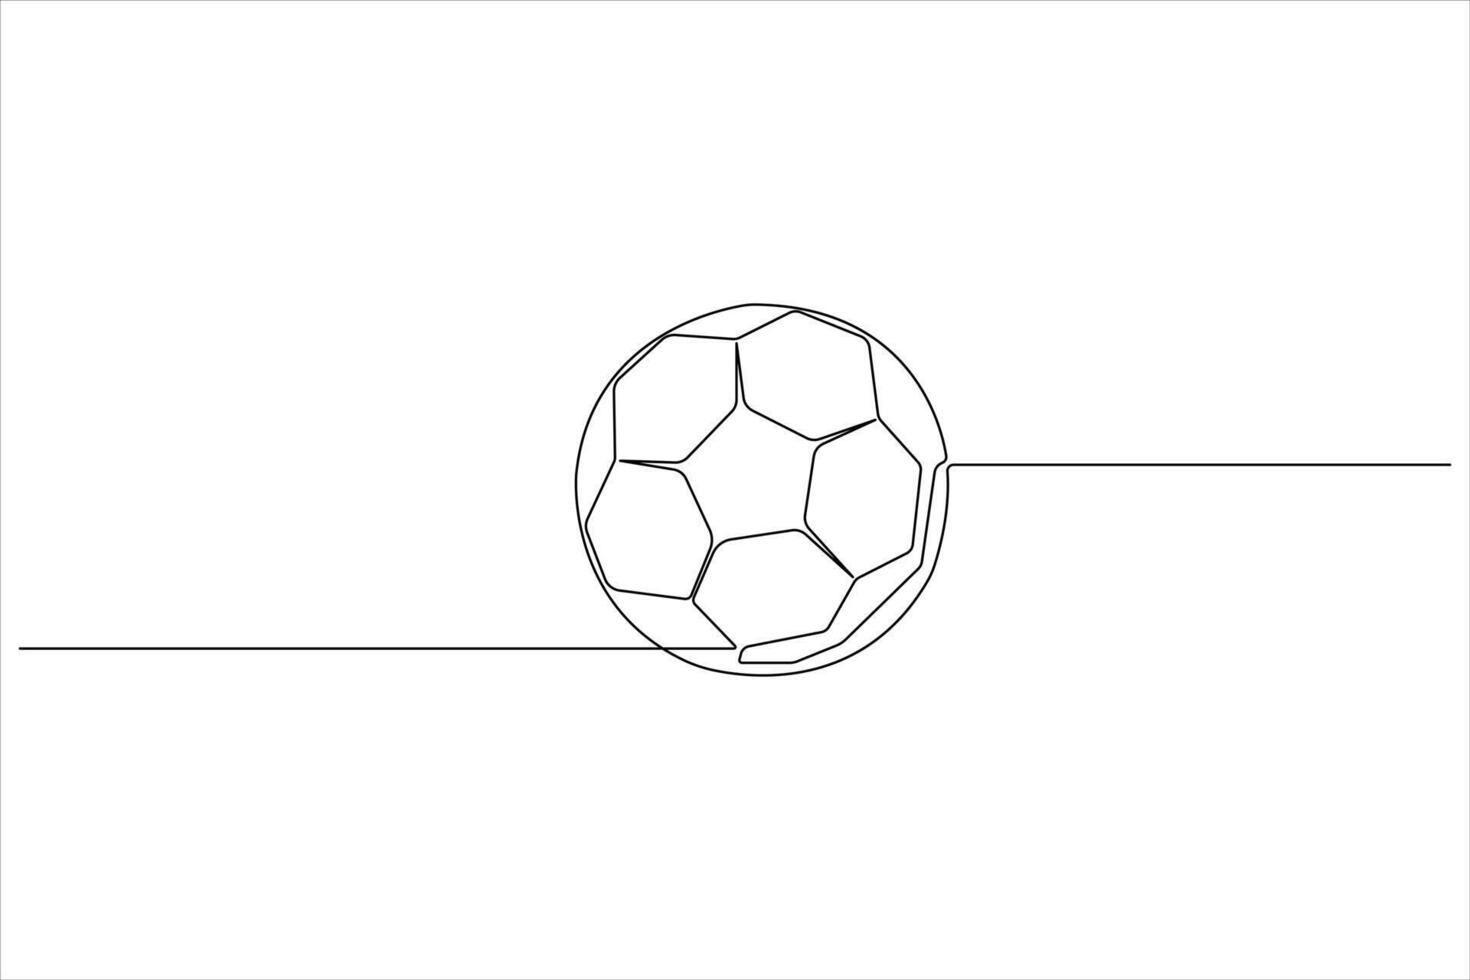 Football vecteur continu un ligne art dessin illustration minimaliste conception